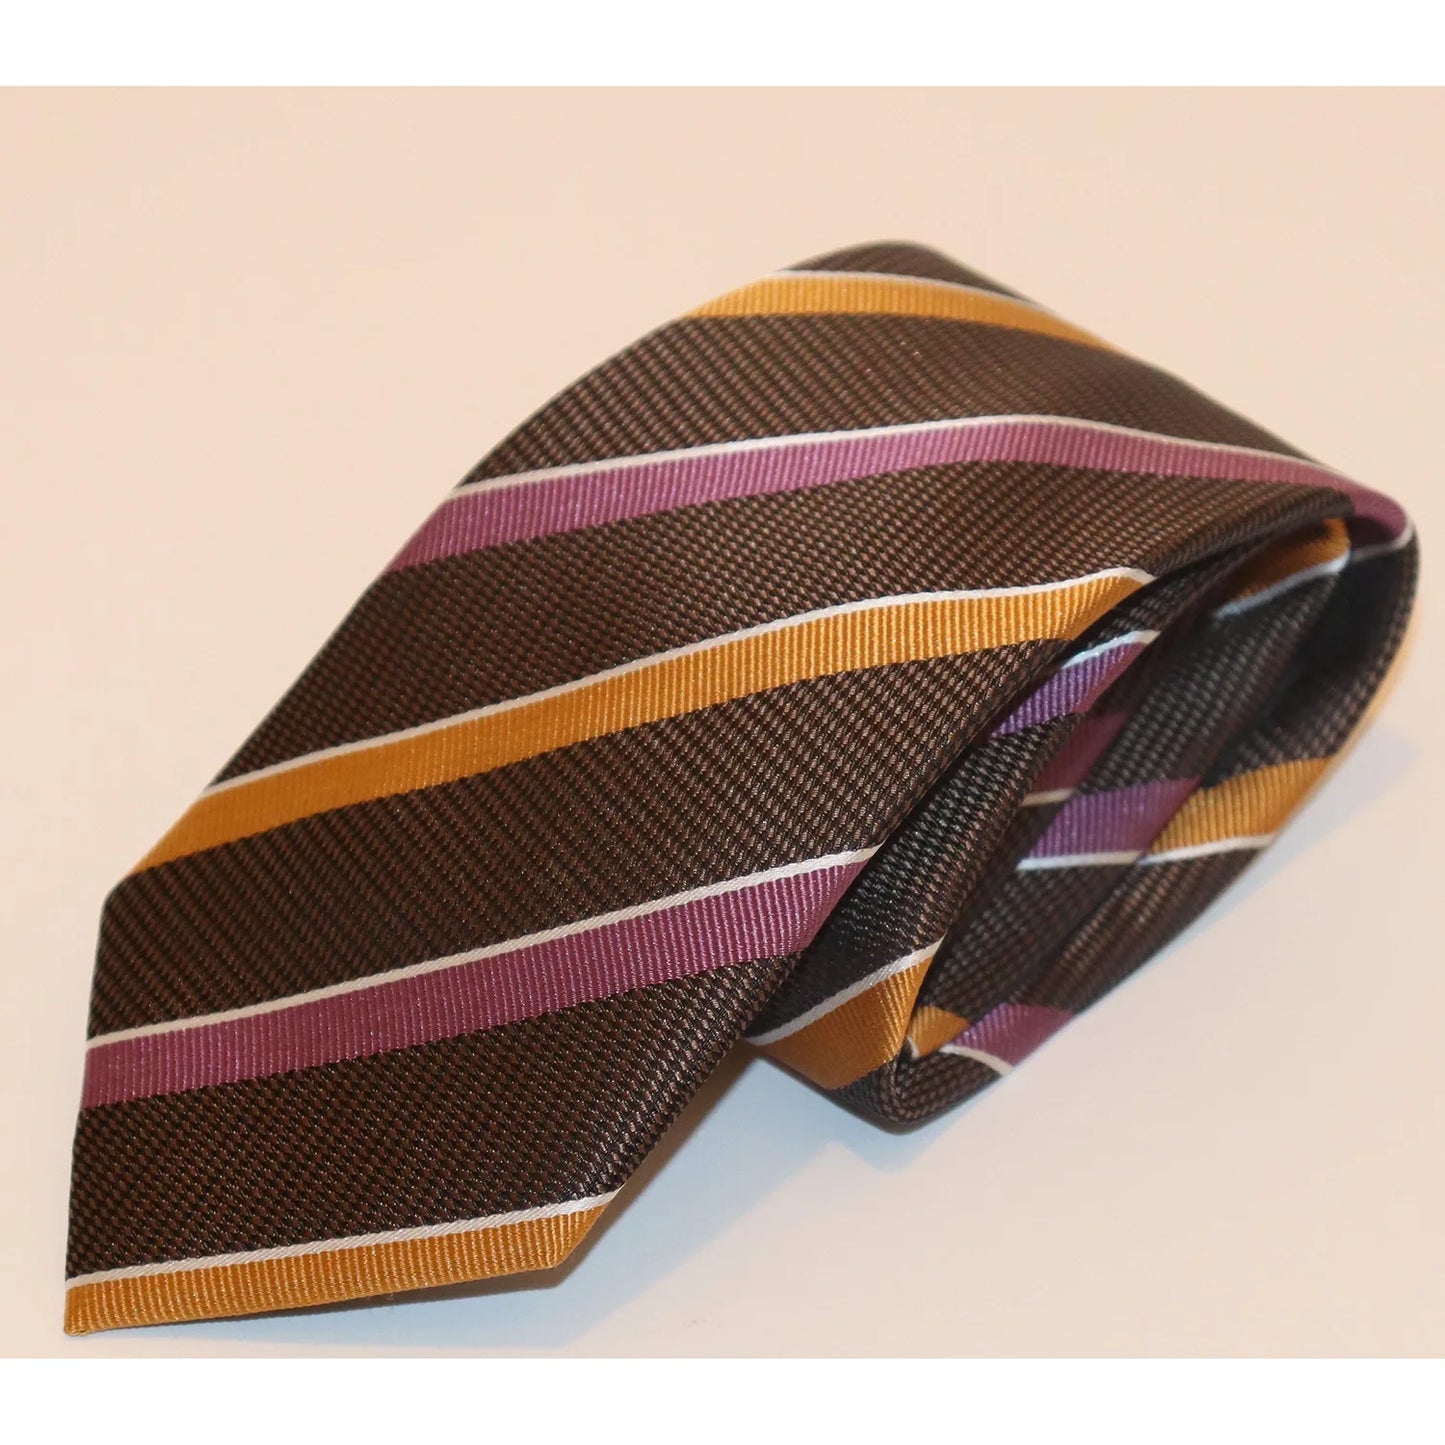 The Shirt Shop Tie - Brown with Orange/Purple Stripes